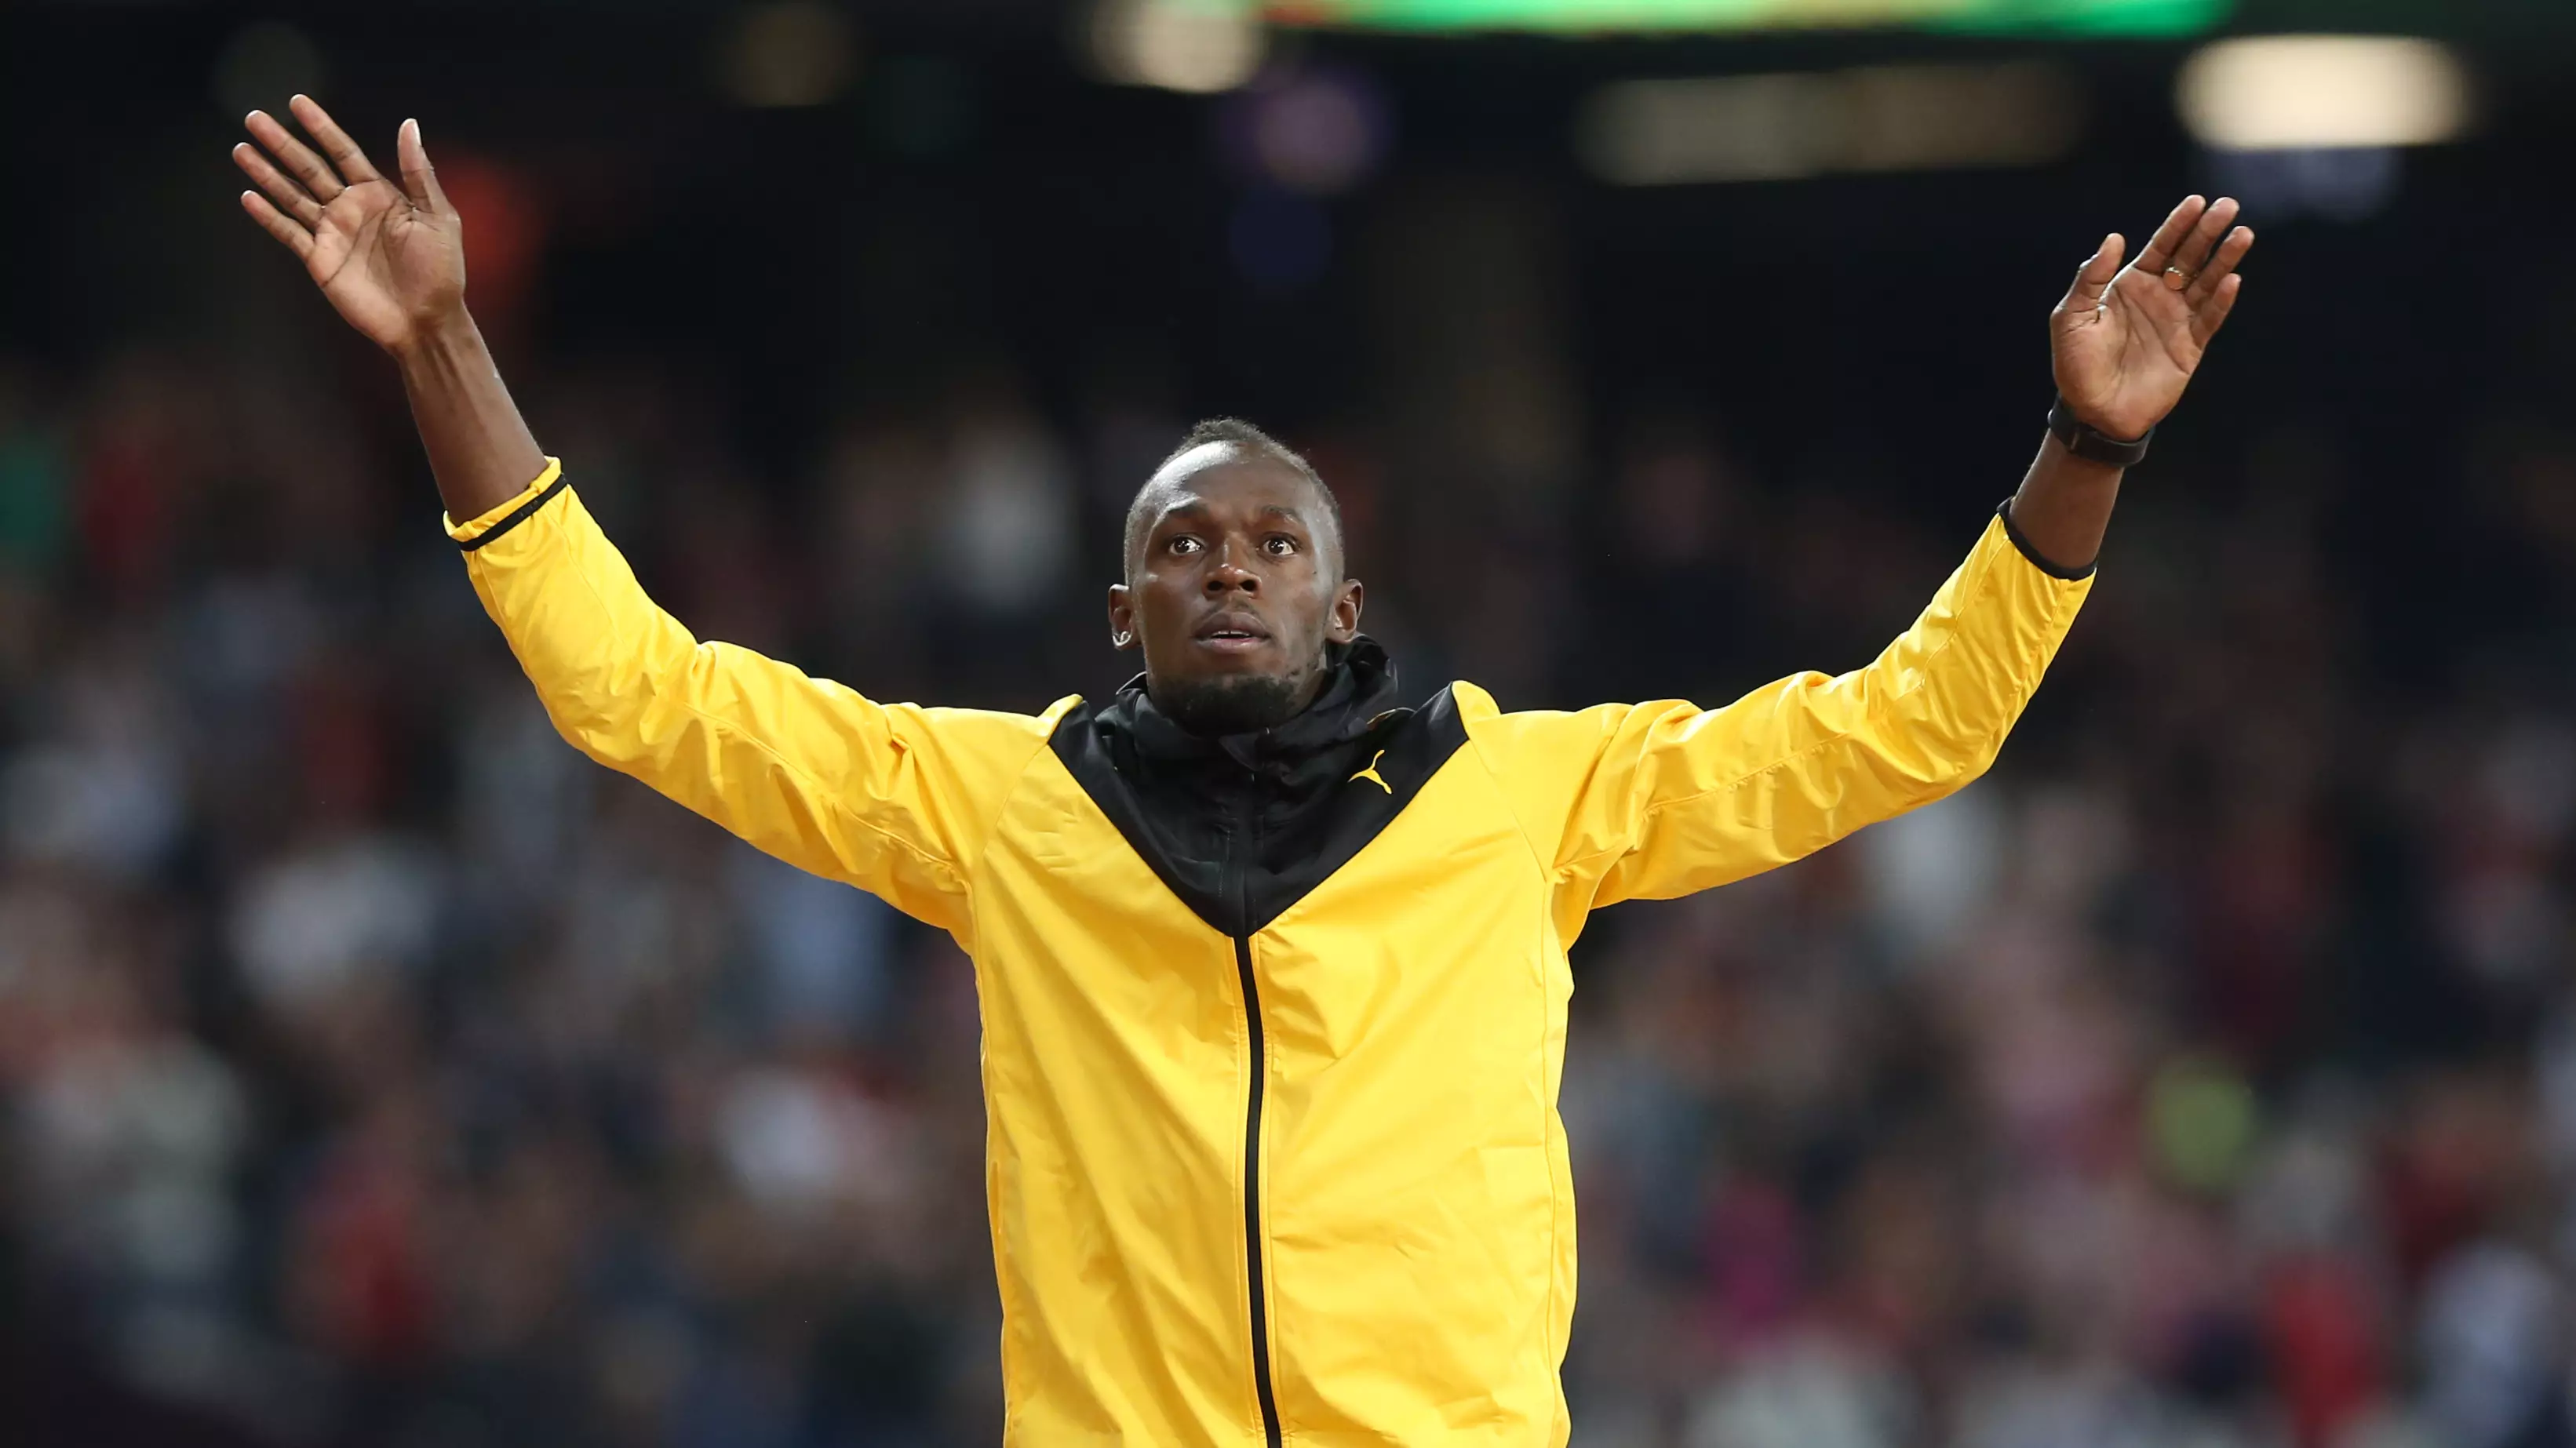 Usain Bolt Confirms When He'll Have Borussia Dortmund Trial